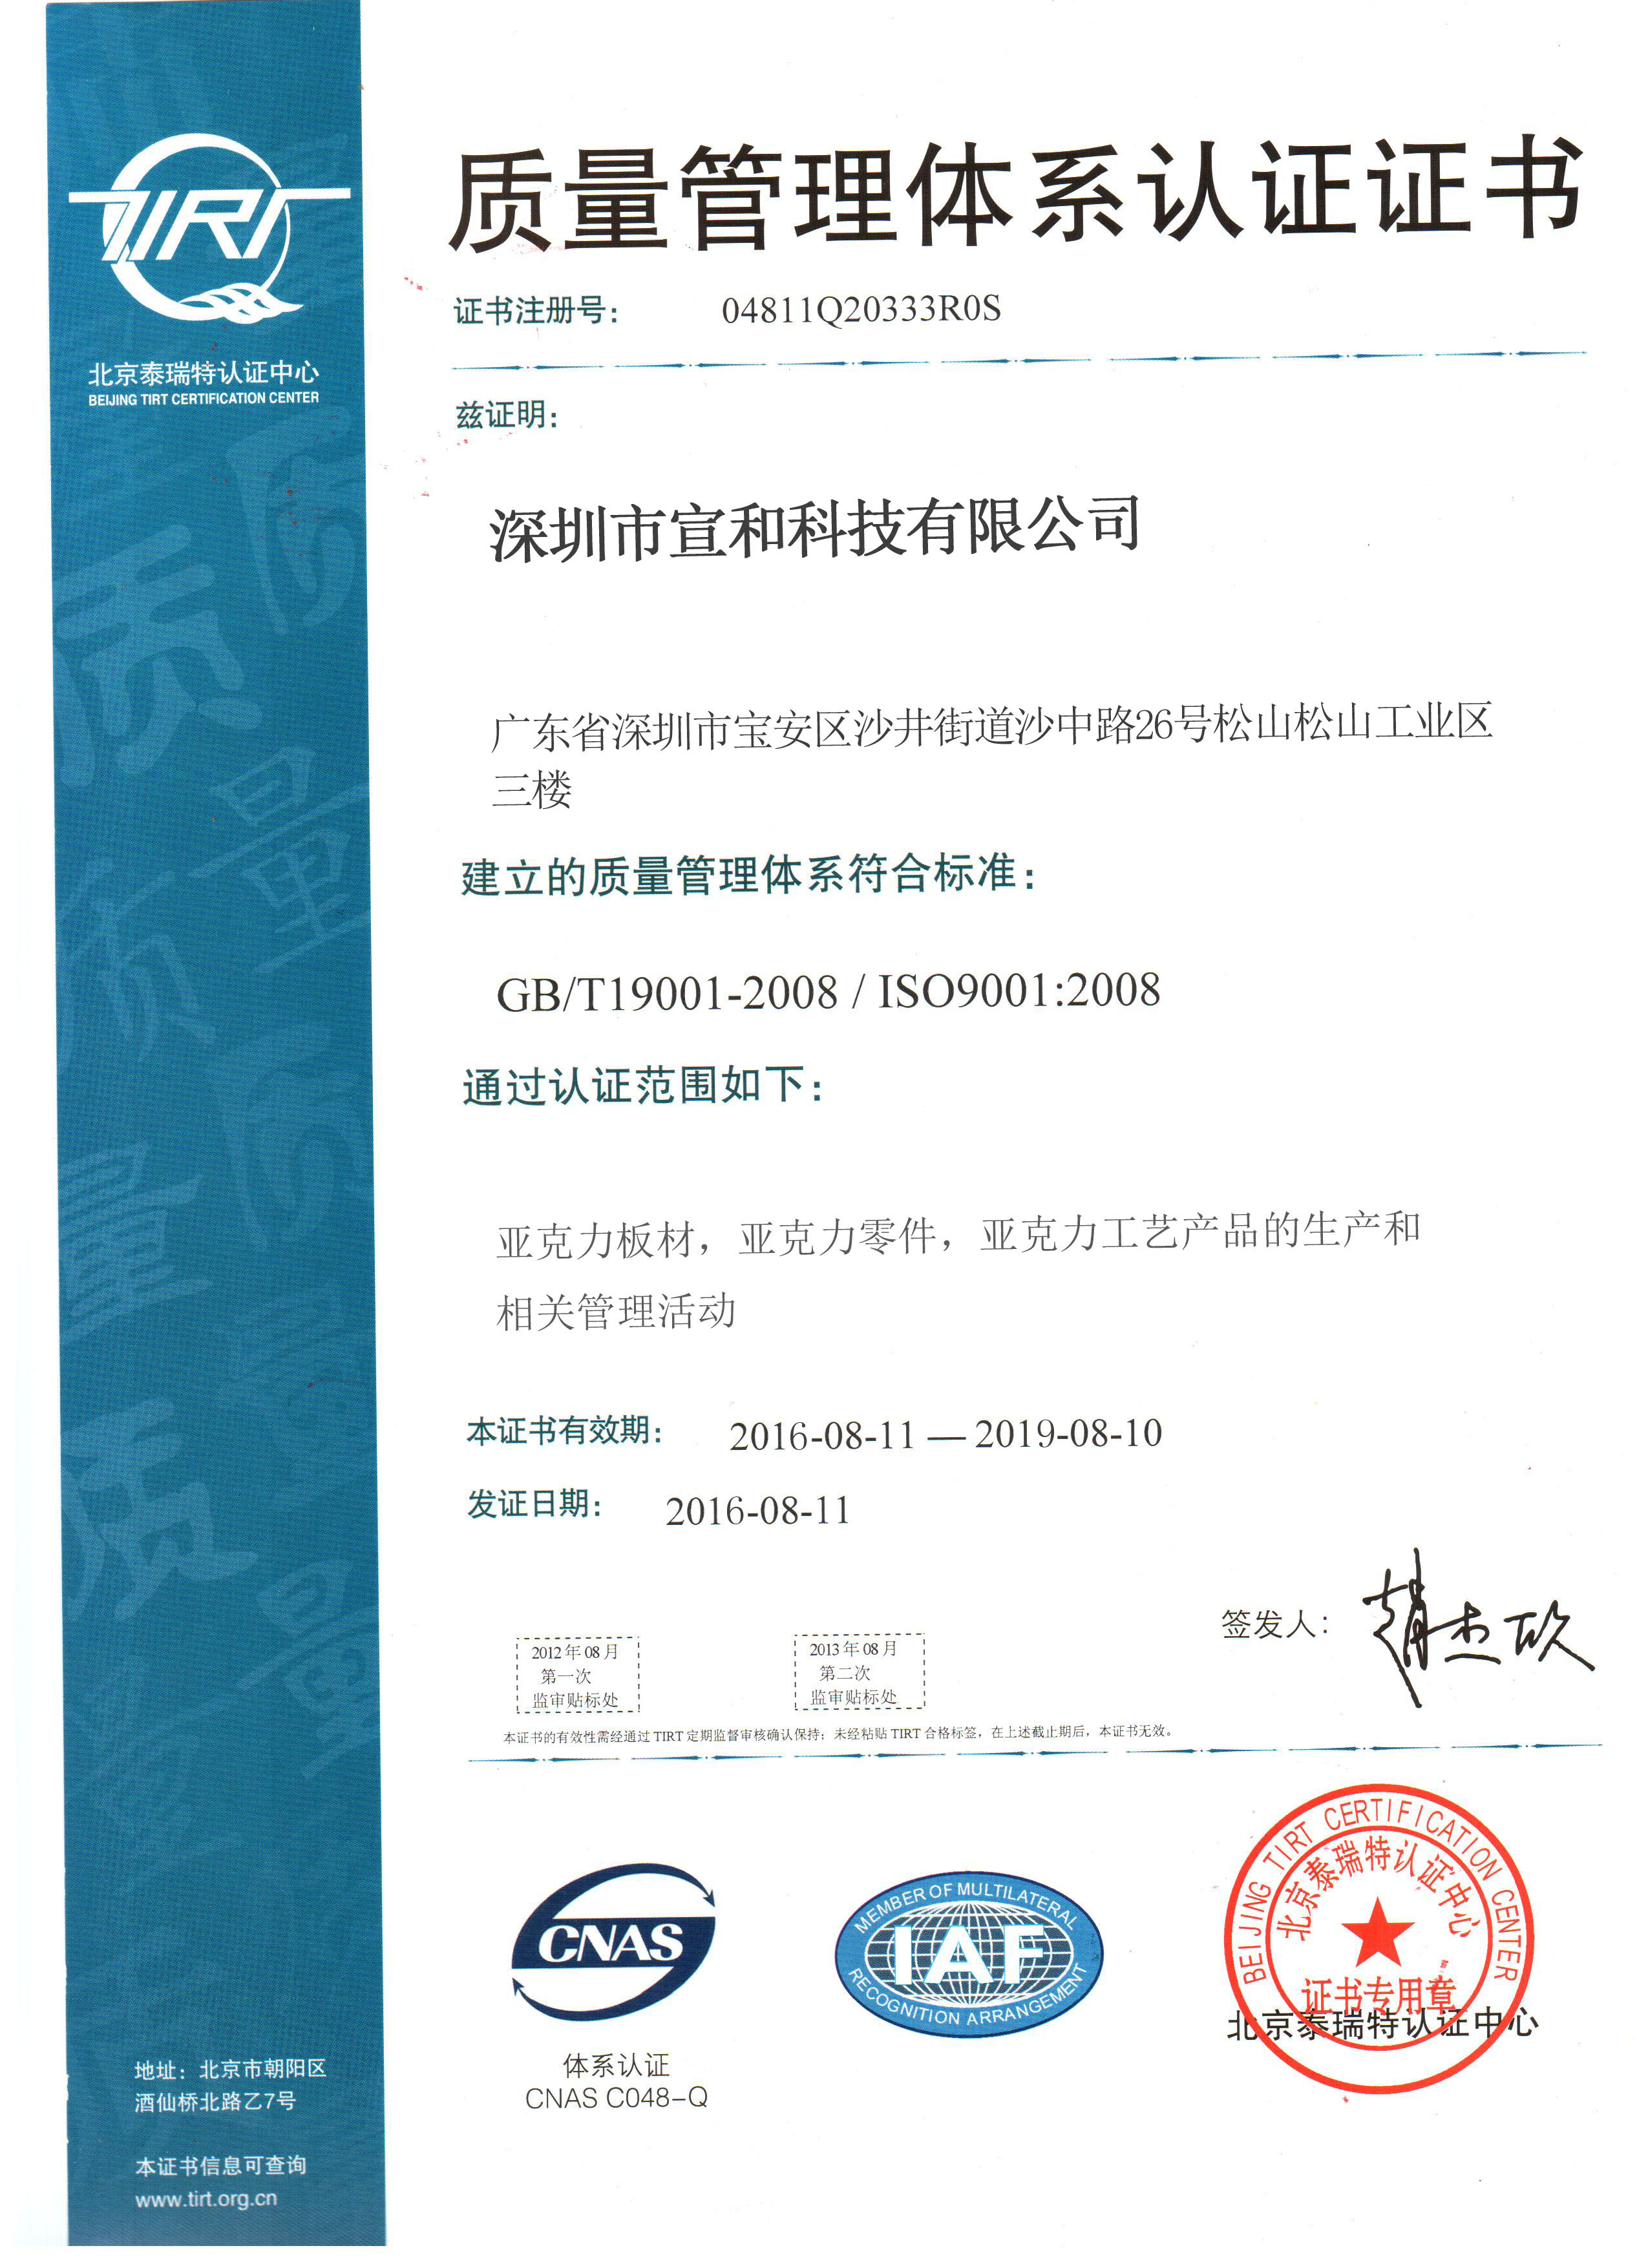 Shenzhen XH Technology Co., Ltd. Certifications